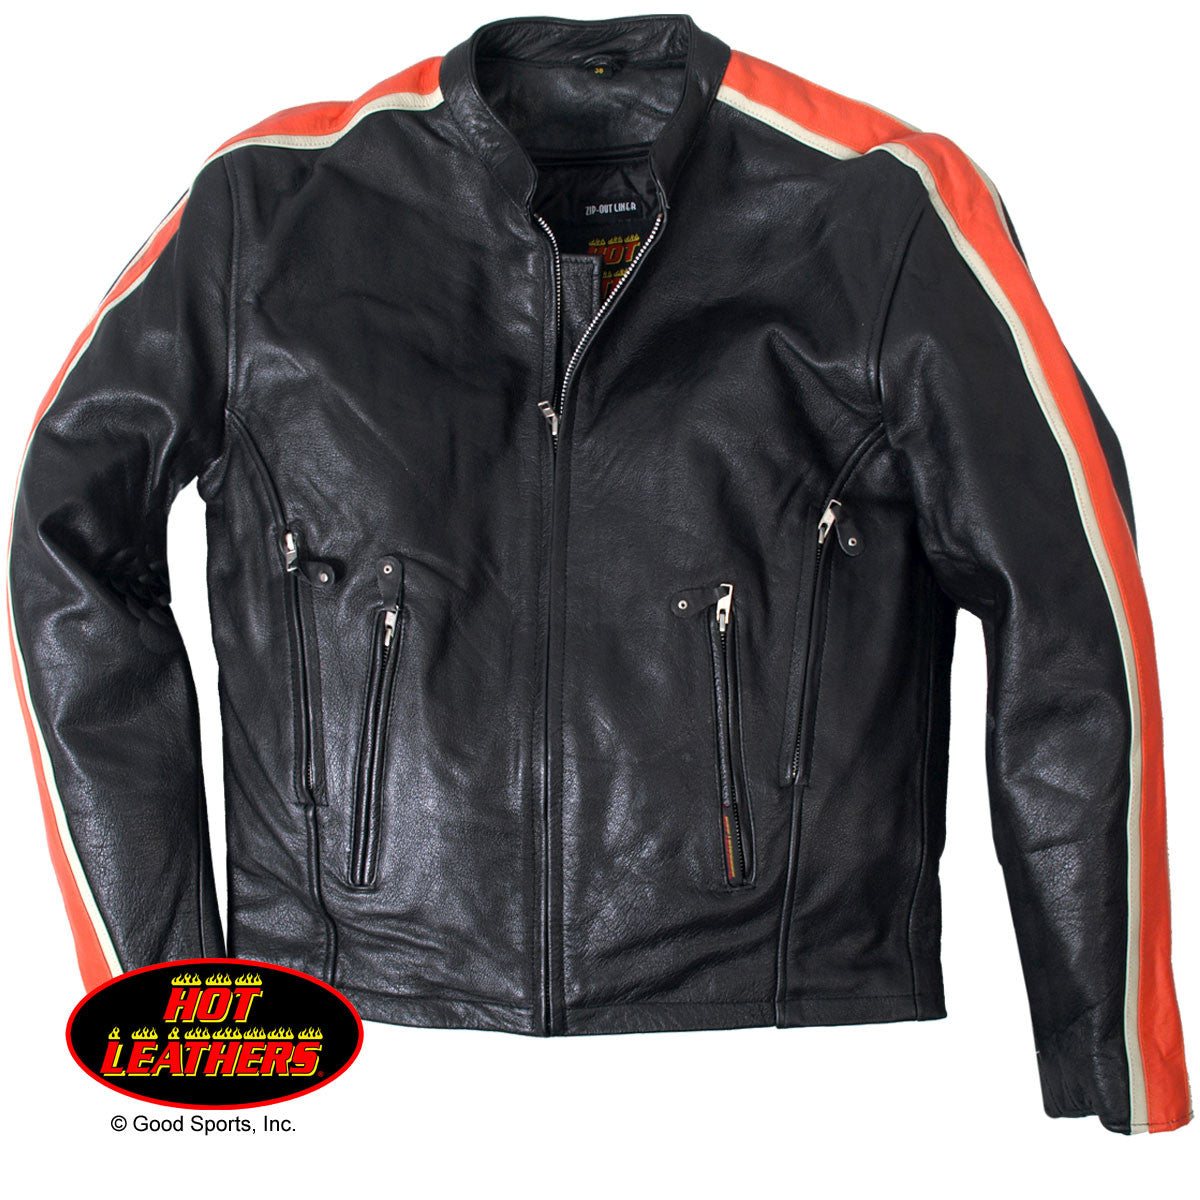 Men's Leather Jacket with Orange & Cream Arm Stripes - Maine-Line Leather - 1